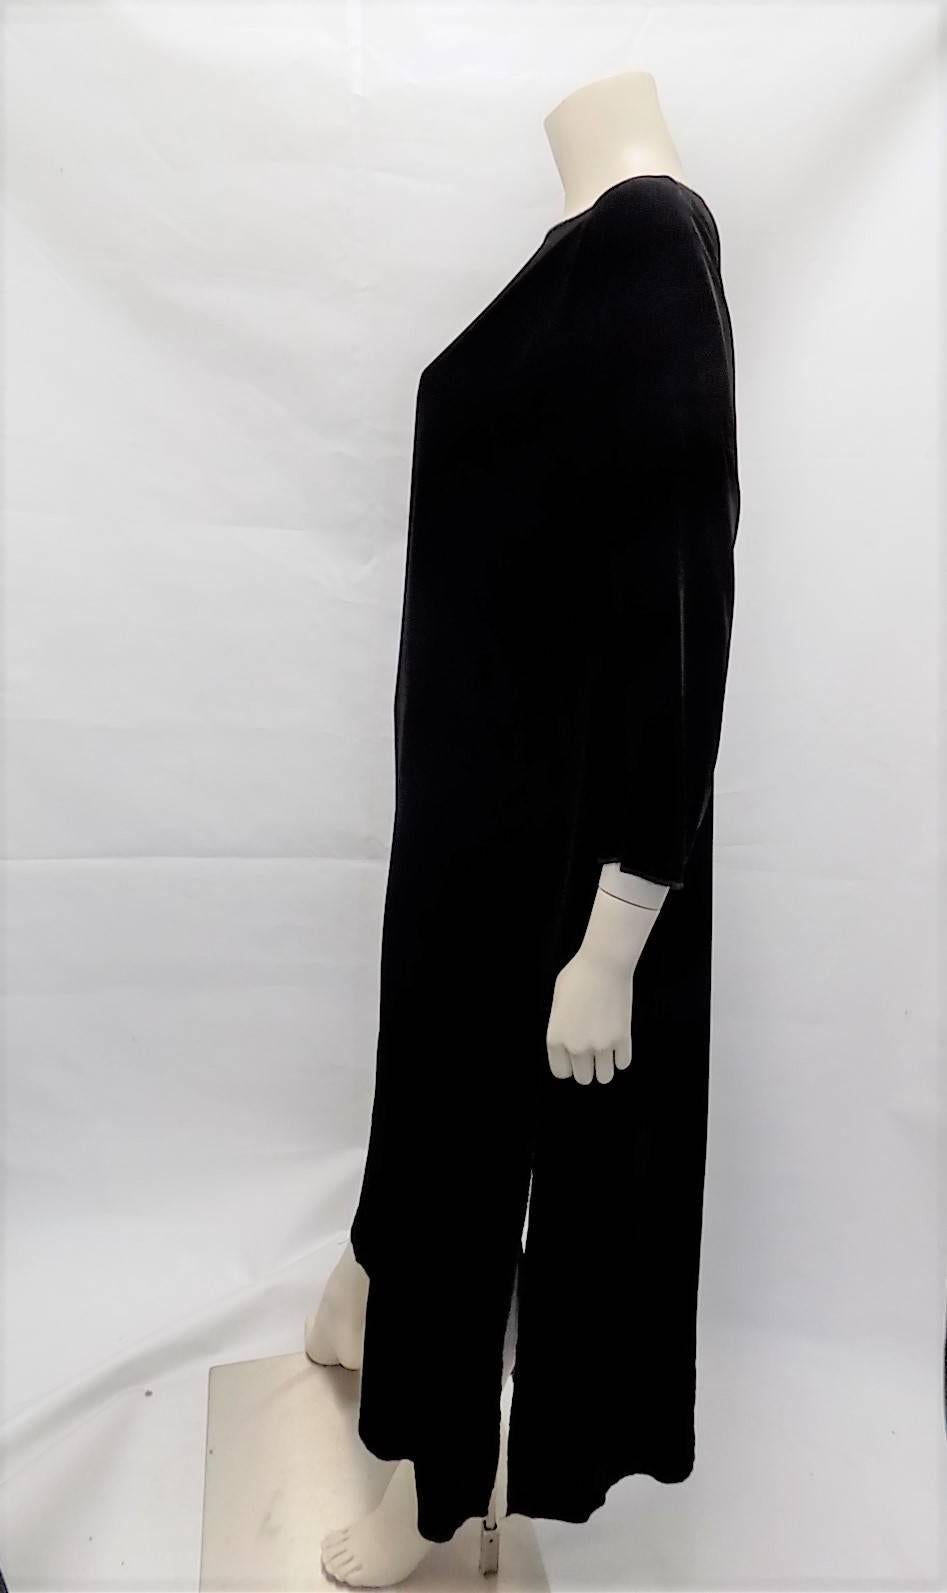 New Never worn Zoran  luxurios Velvet Long sleeves Dress- Caftan . Side slits Dark brown color. One size 
Bust 46